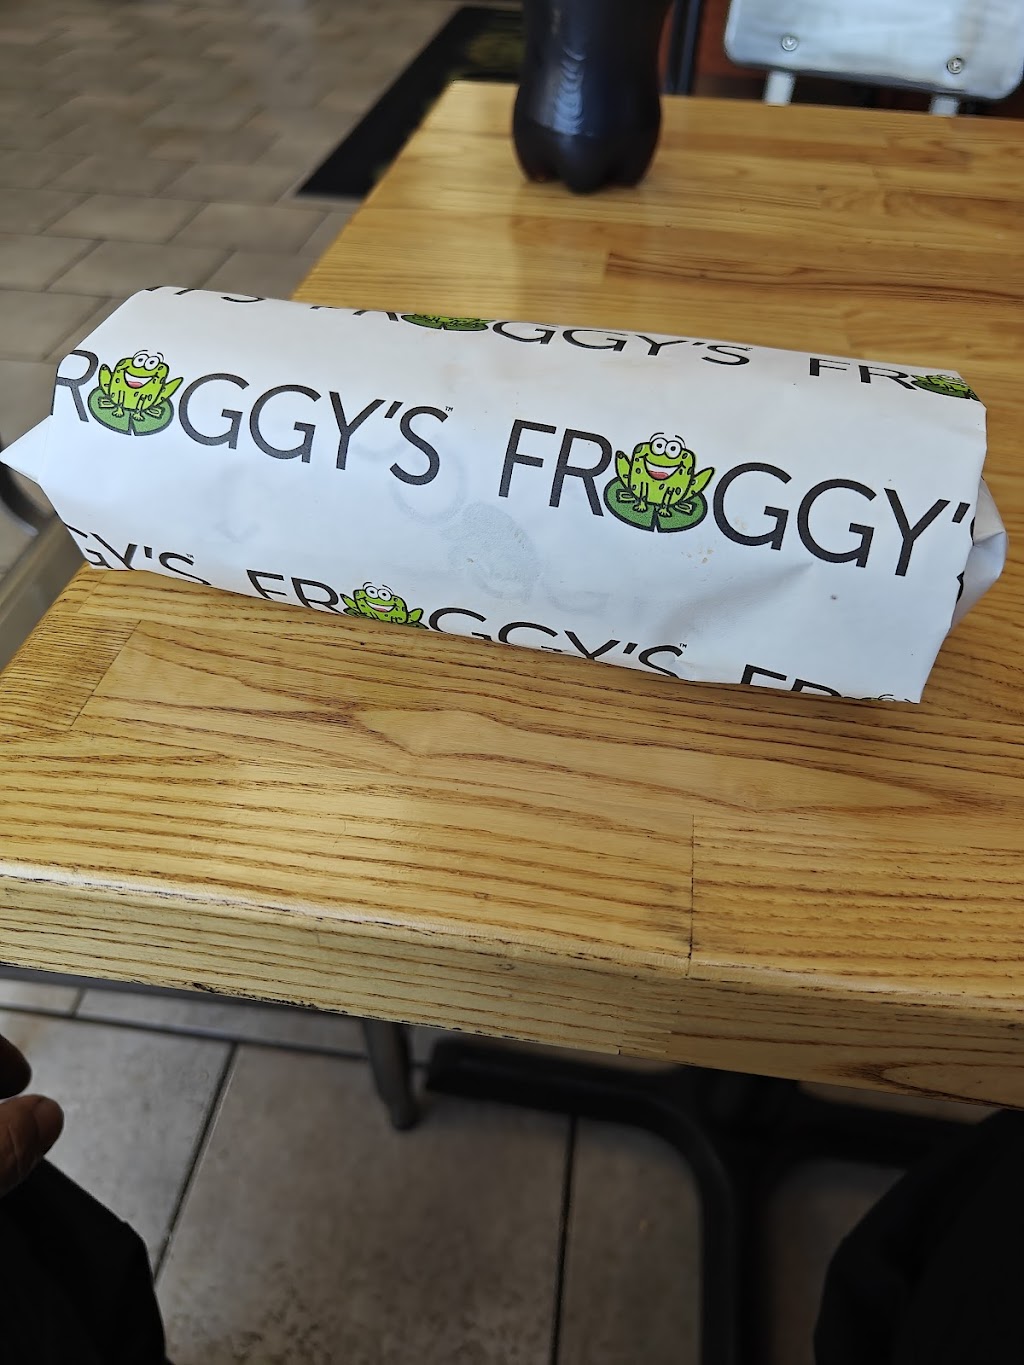 Froggys Sandwiches Brewster | 1620 NY-22, Brewster, NY 10509 | Phone: (845) 237-6449